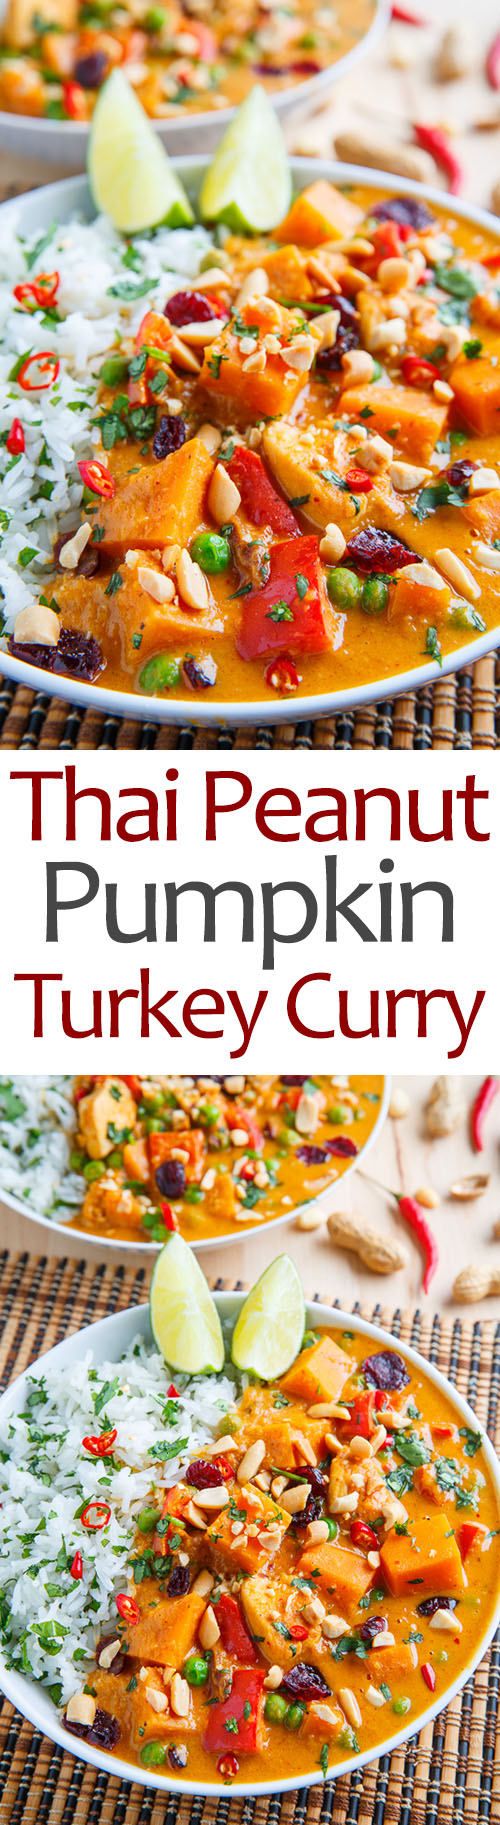 Thai Peanut Pumpkin Turkey Curry